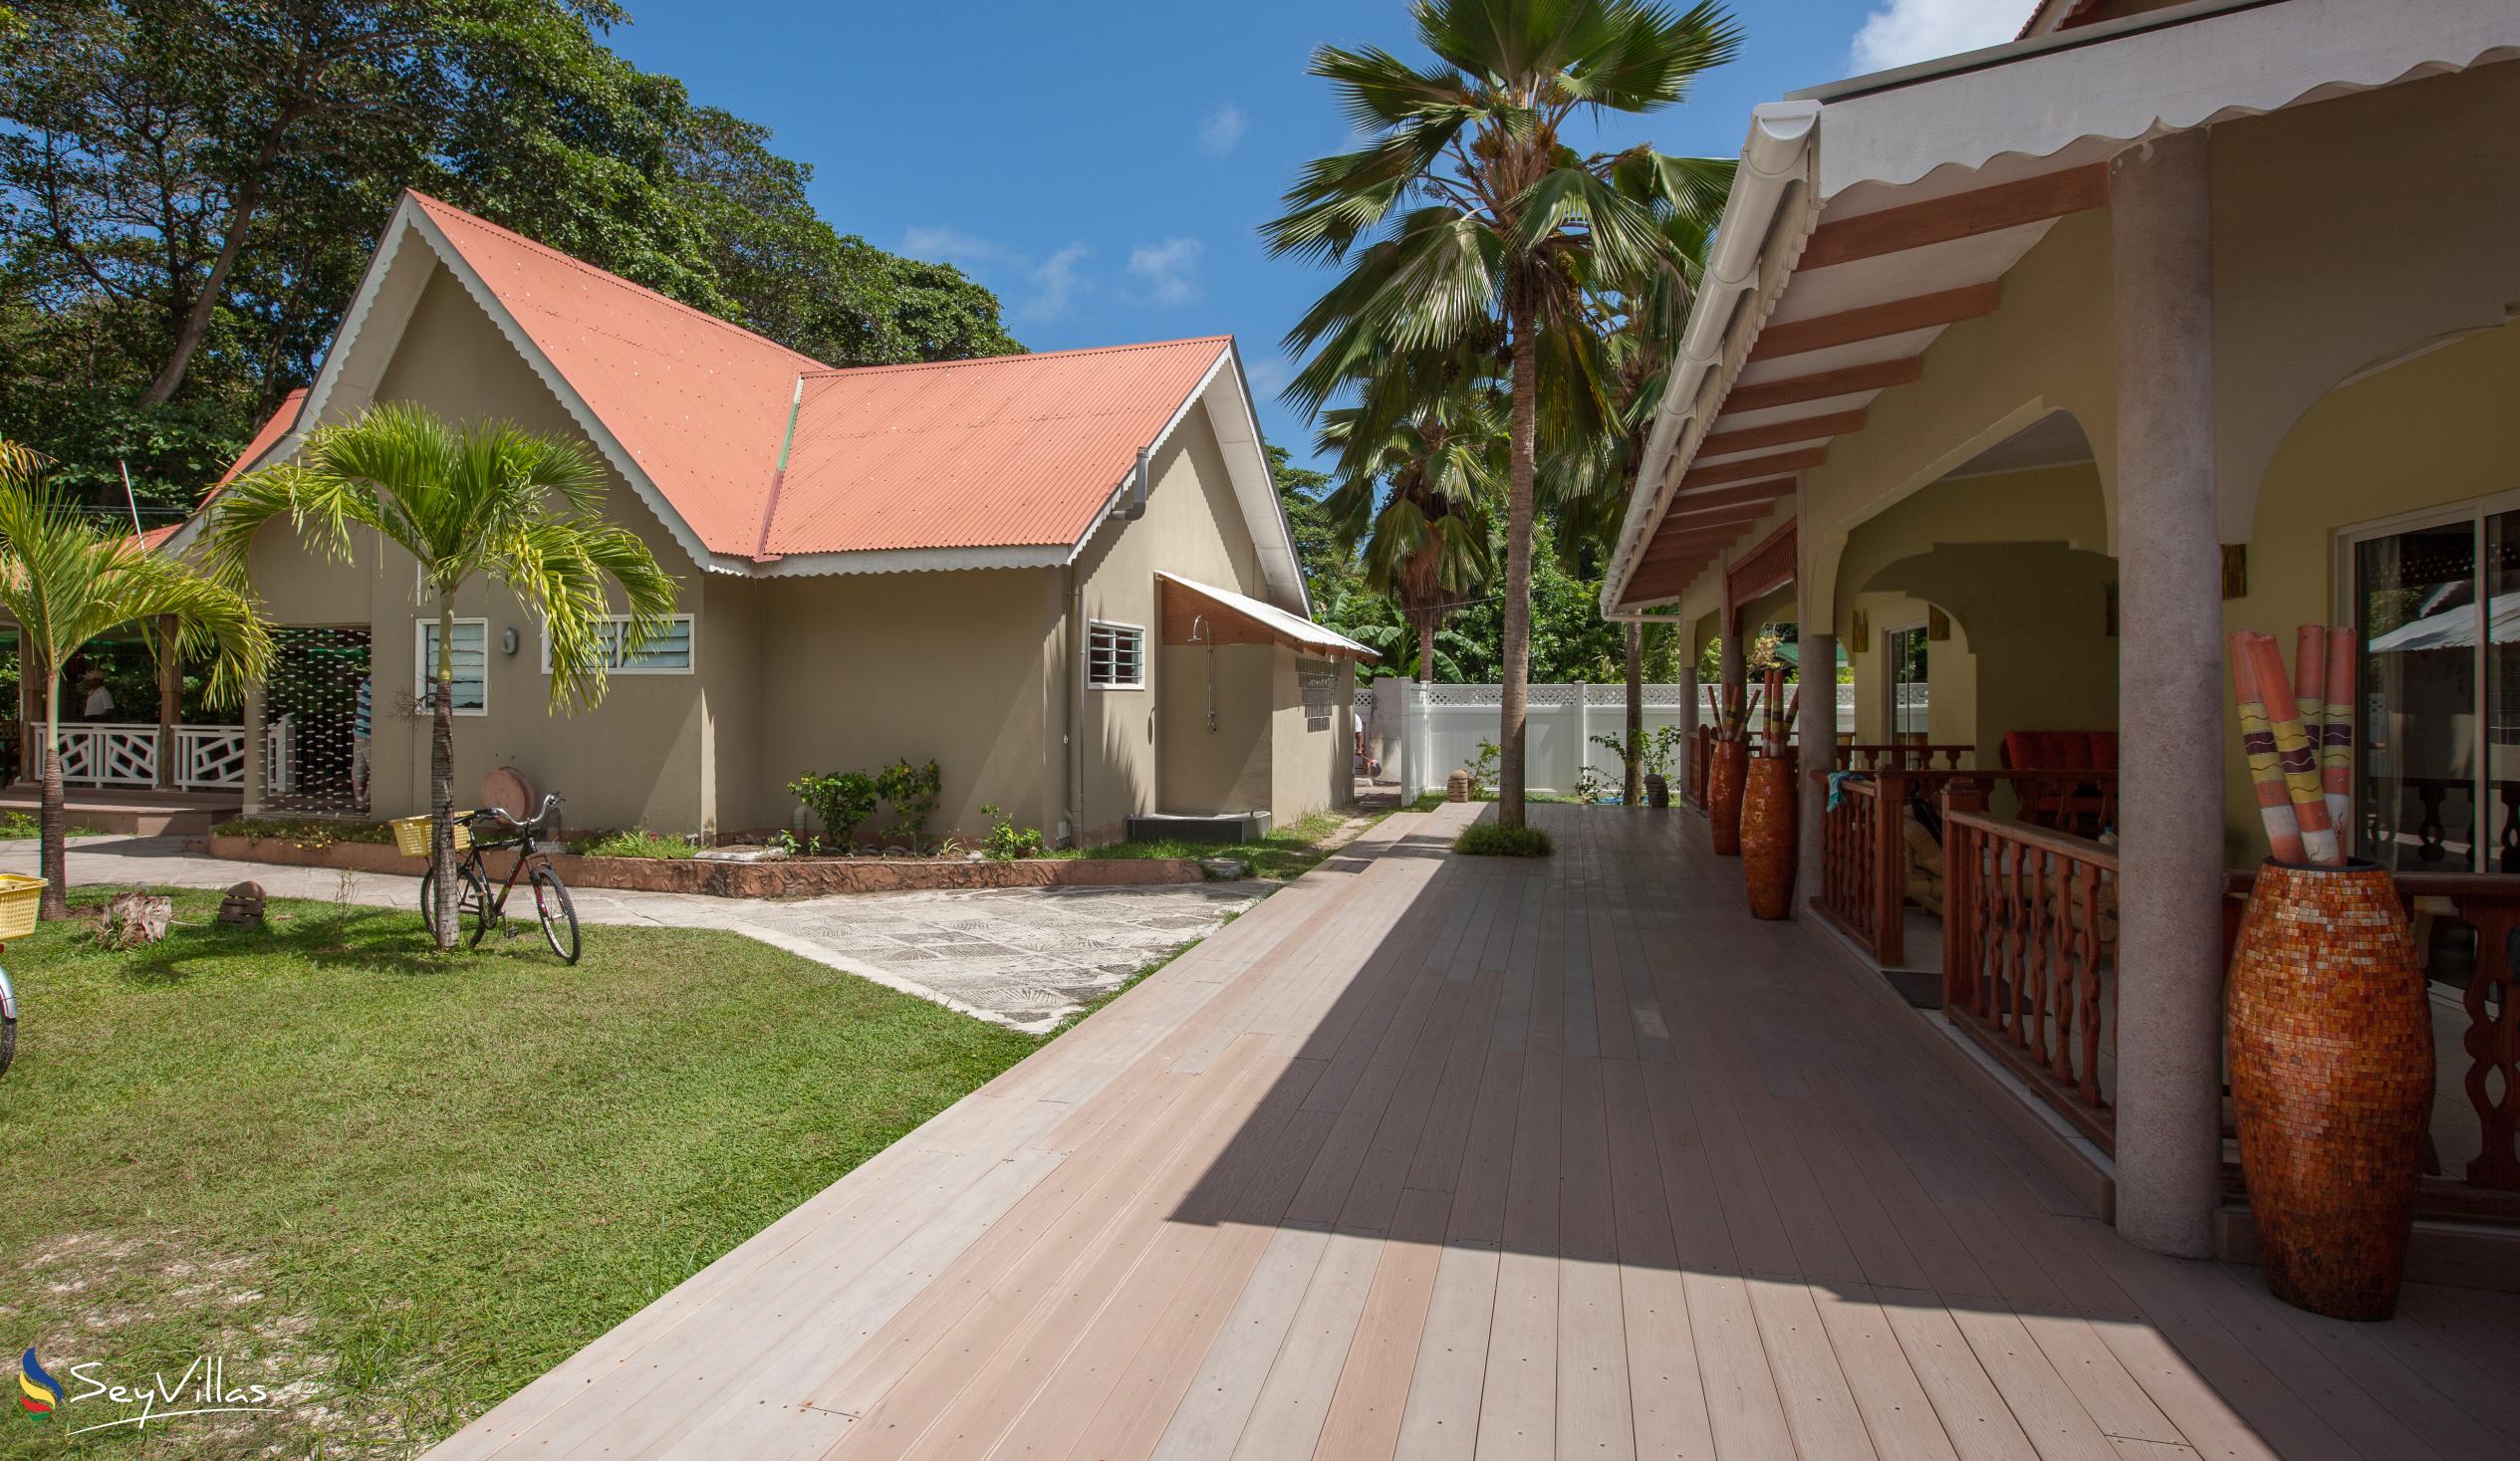 Photo 5: Villa Authentique - Outdoor area - La Digue (Seychelles)